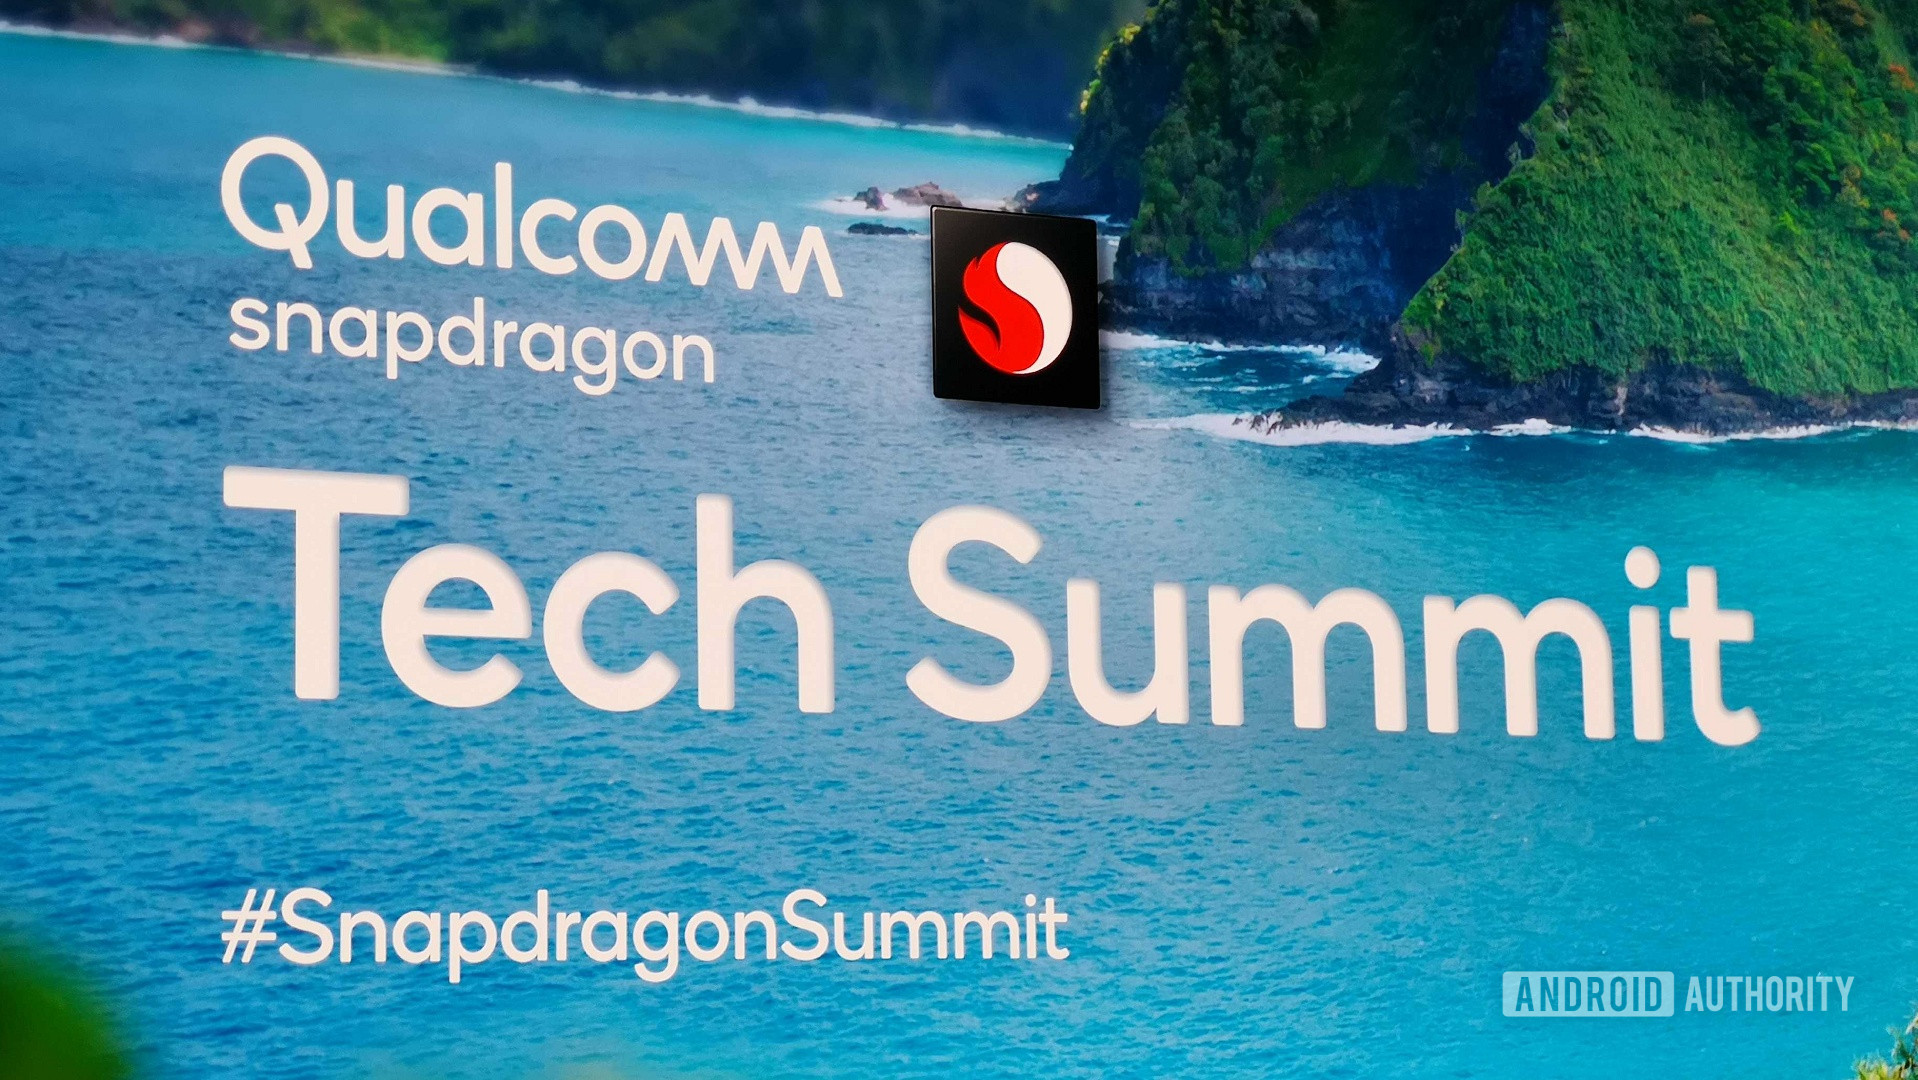 Qualcomm Snapdragon Tech Summit 2019